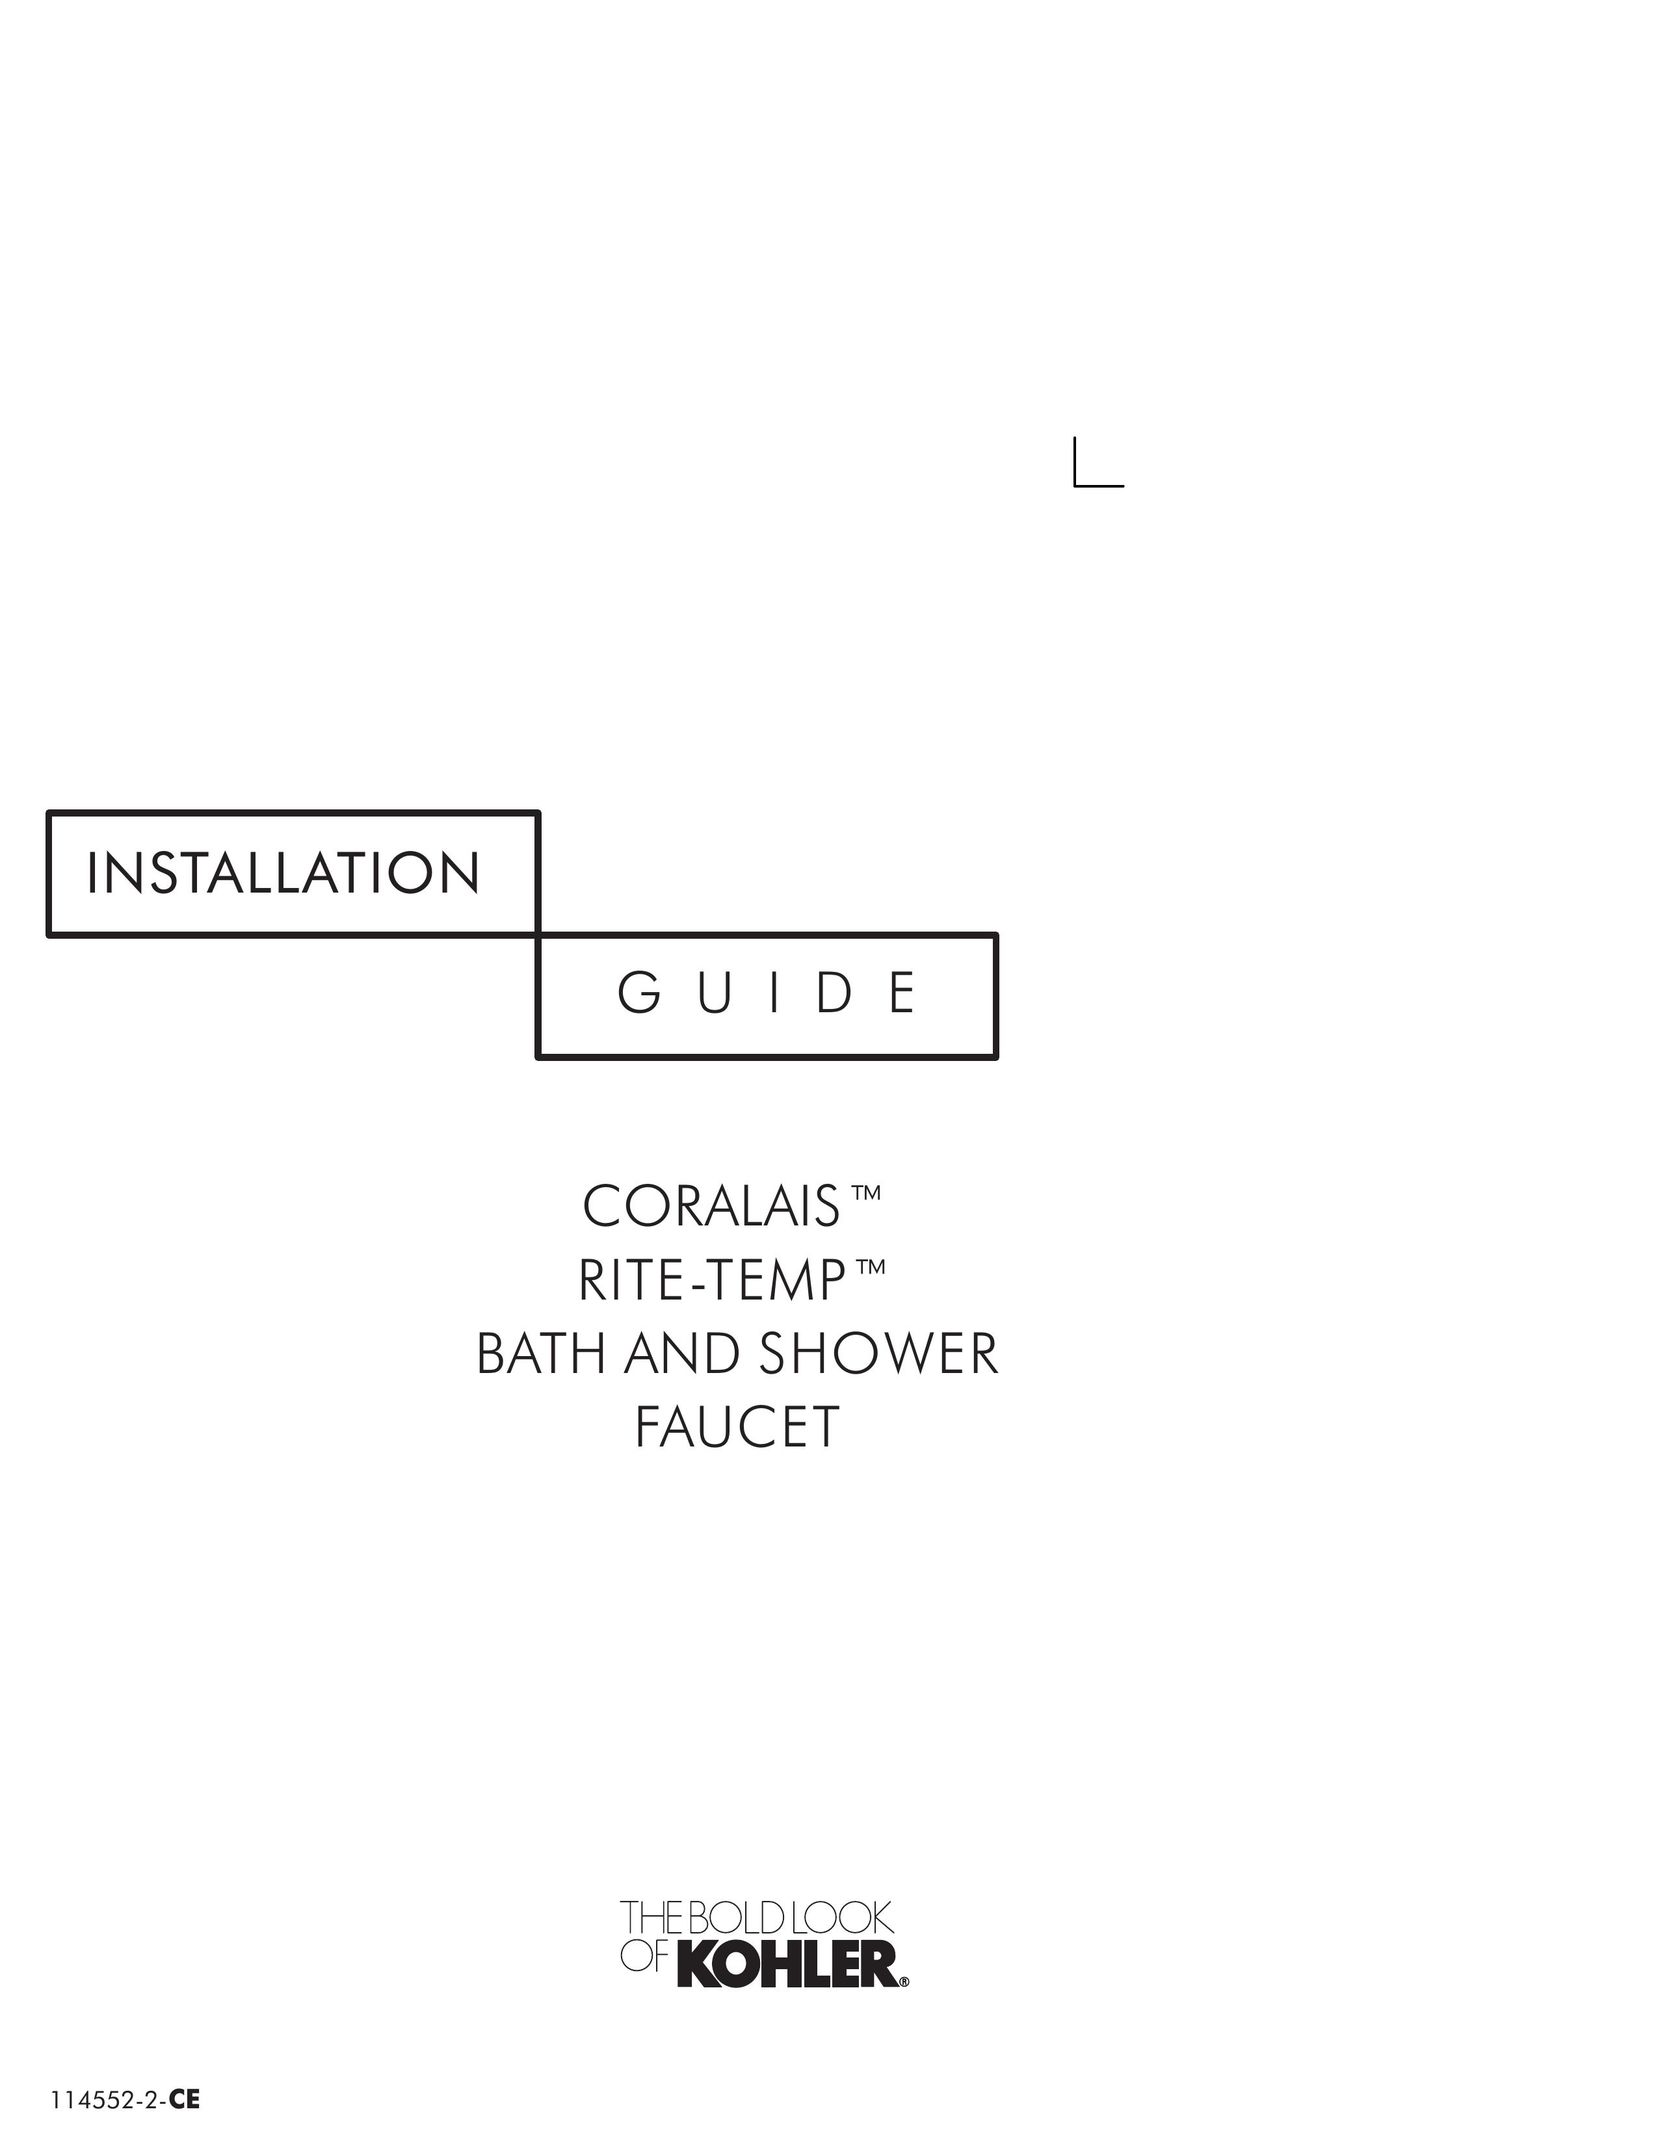 Kohler 114522-2-CE Plumbing Product User Manual